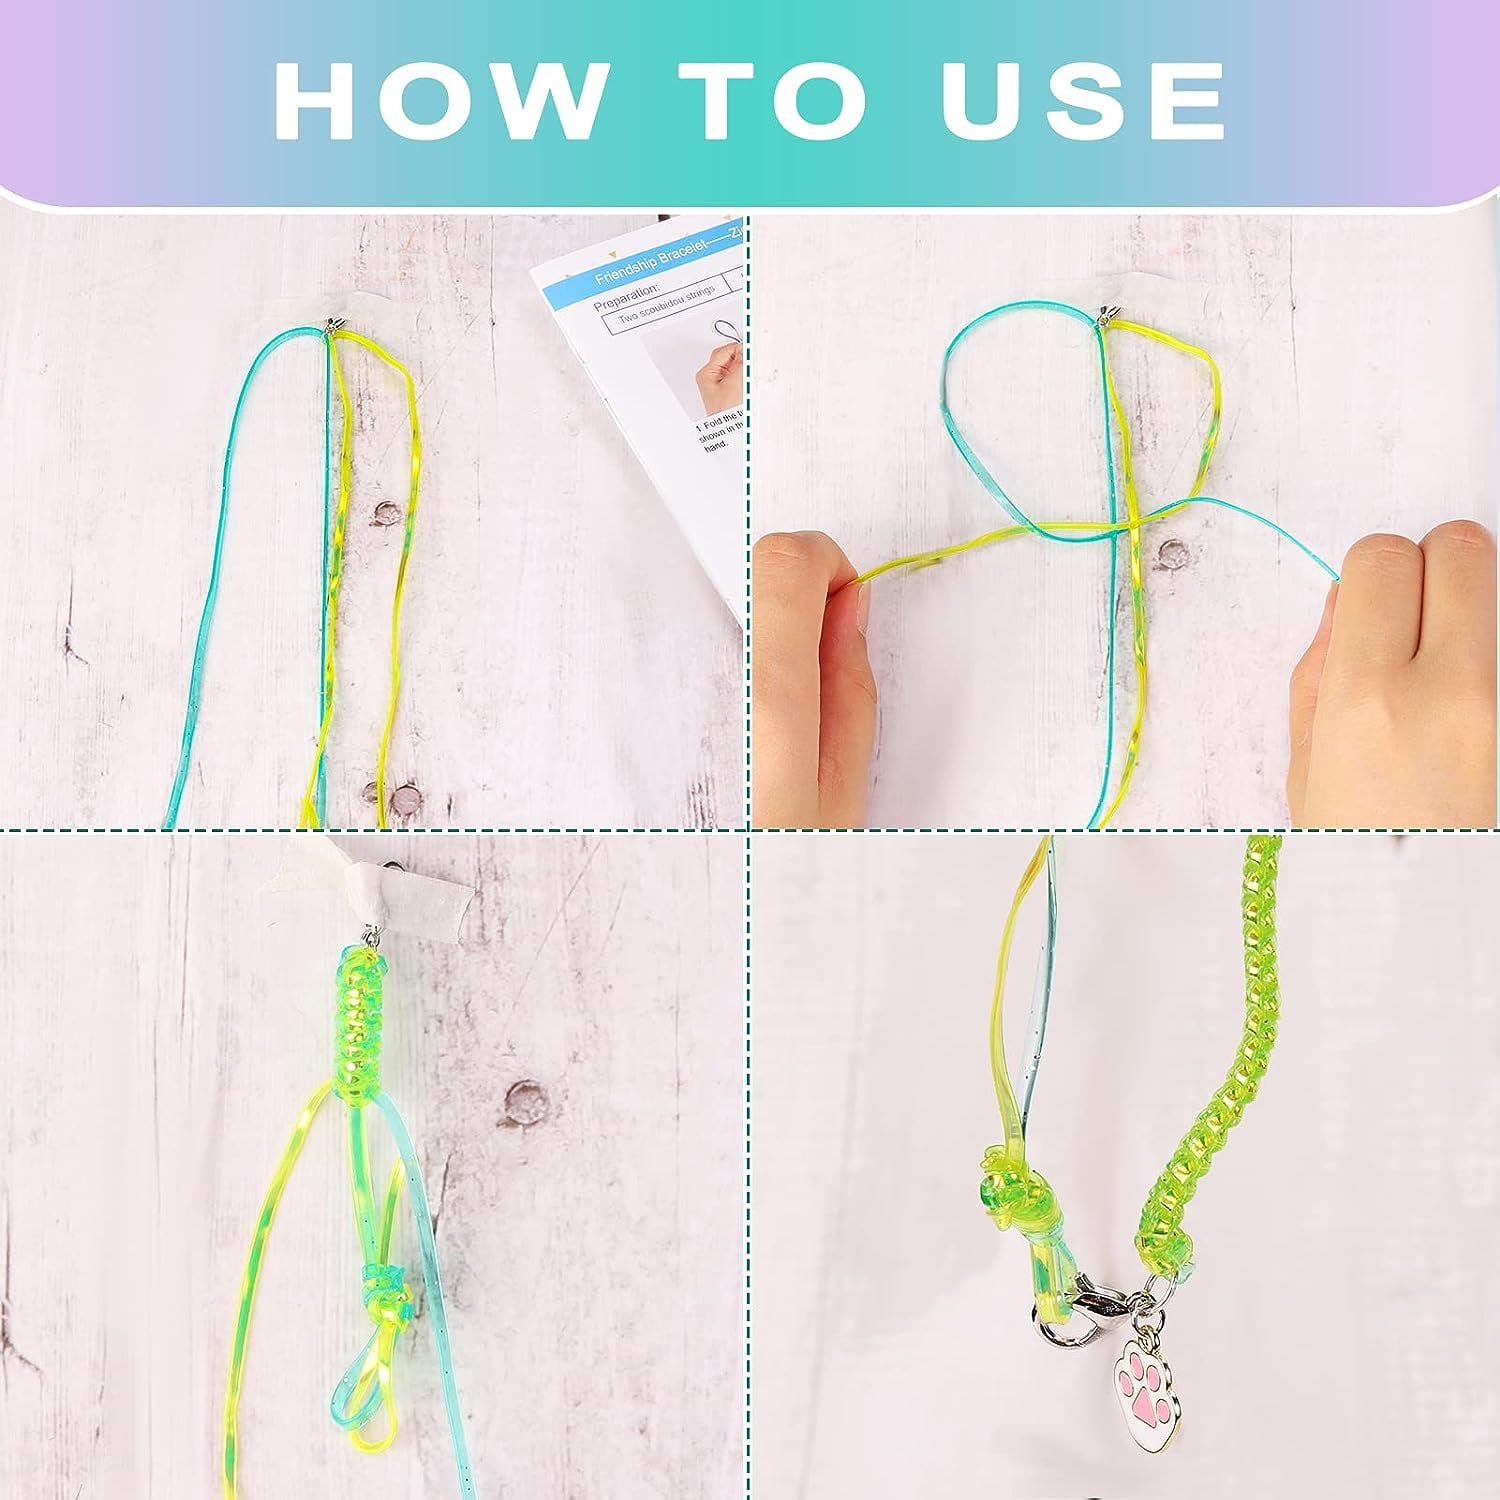 51 DIY Bracelet Ideas: Master the Art of Upcycled and Homemade Bracelets -  Pillar Box Blue